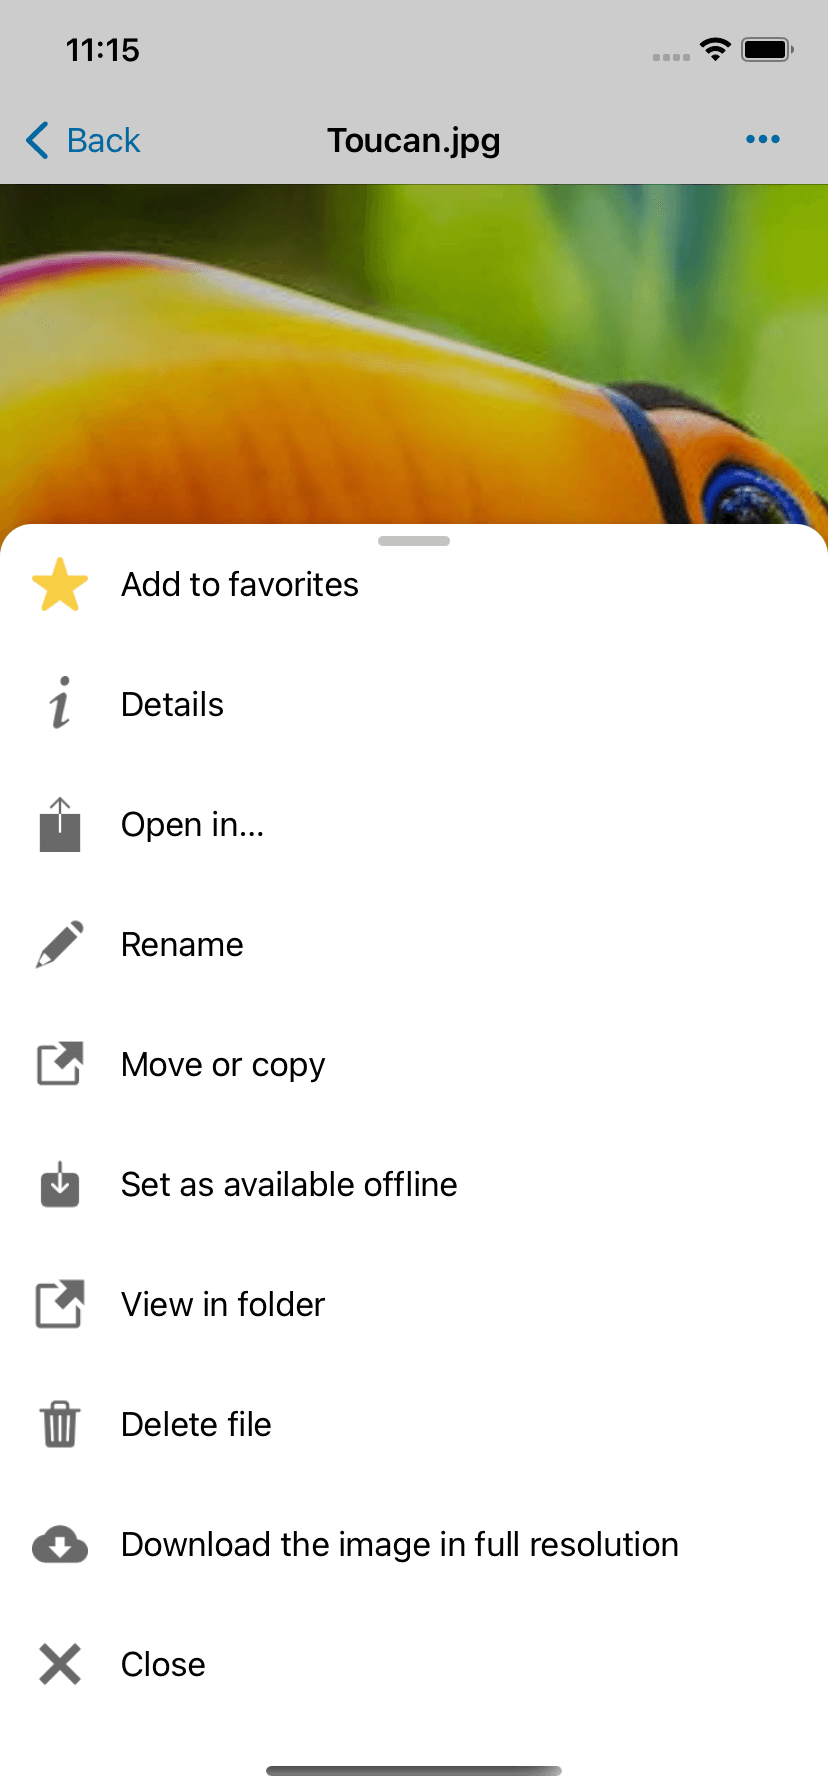 view in folder option